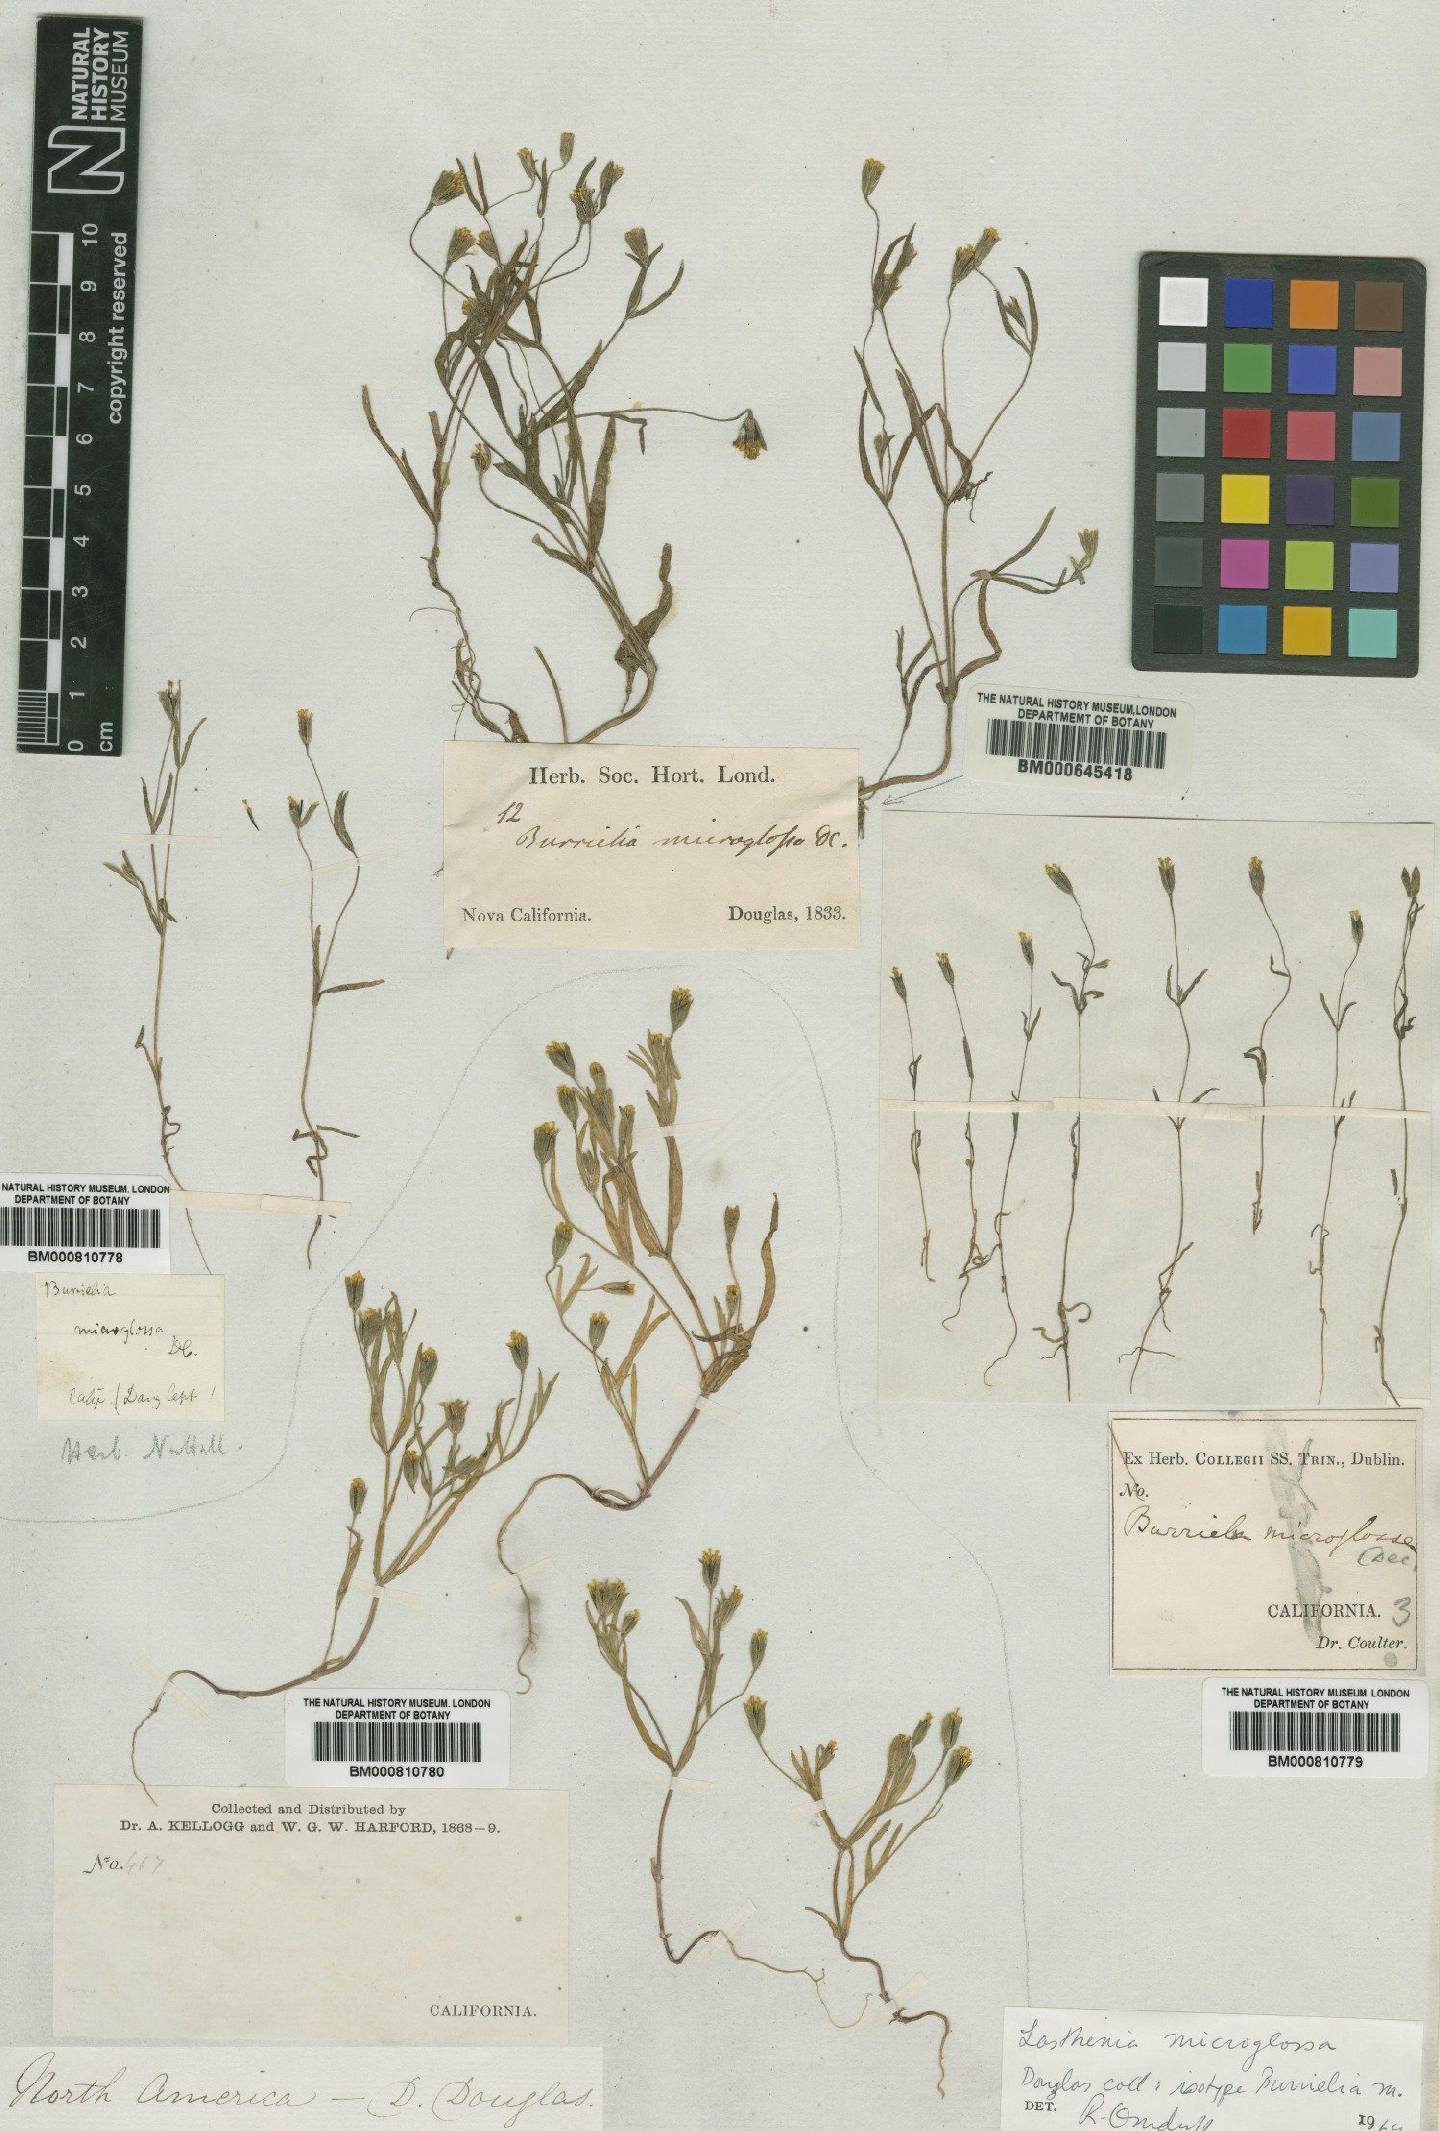 To NHMUK collection (Lasthenia microglossa (DC.) Greene; Isotype; NHMUK:ecatalogue:4987390)